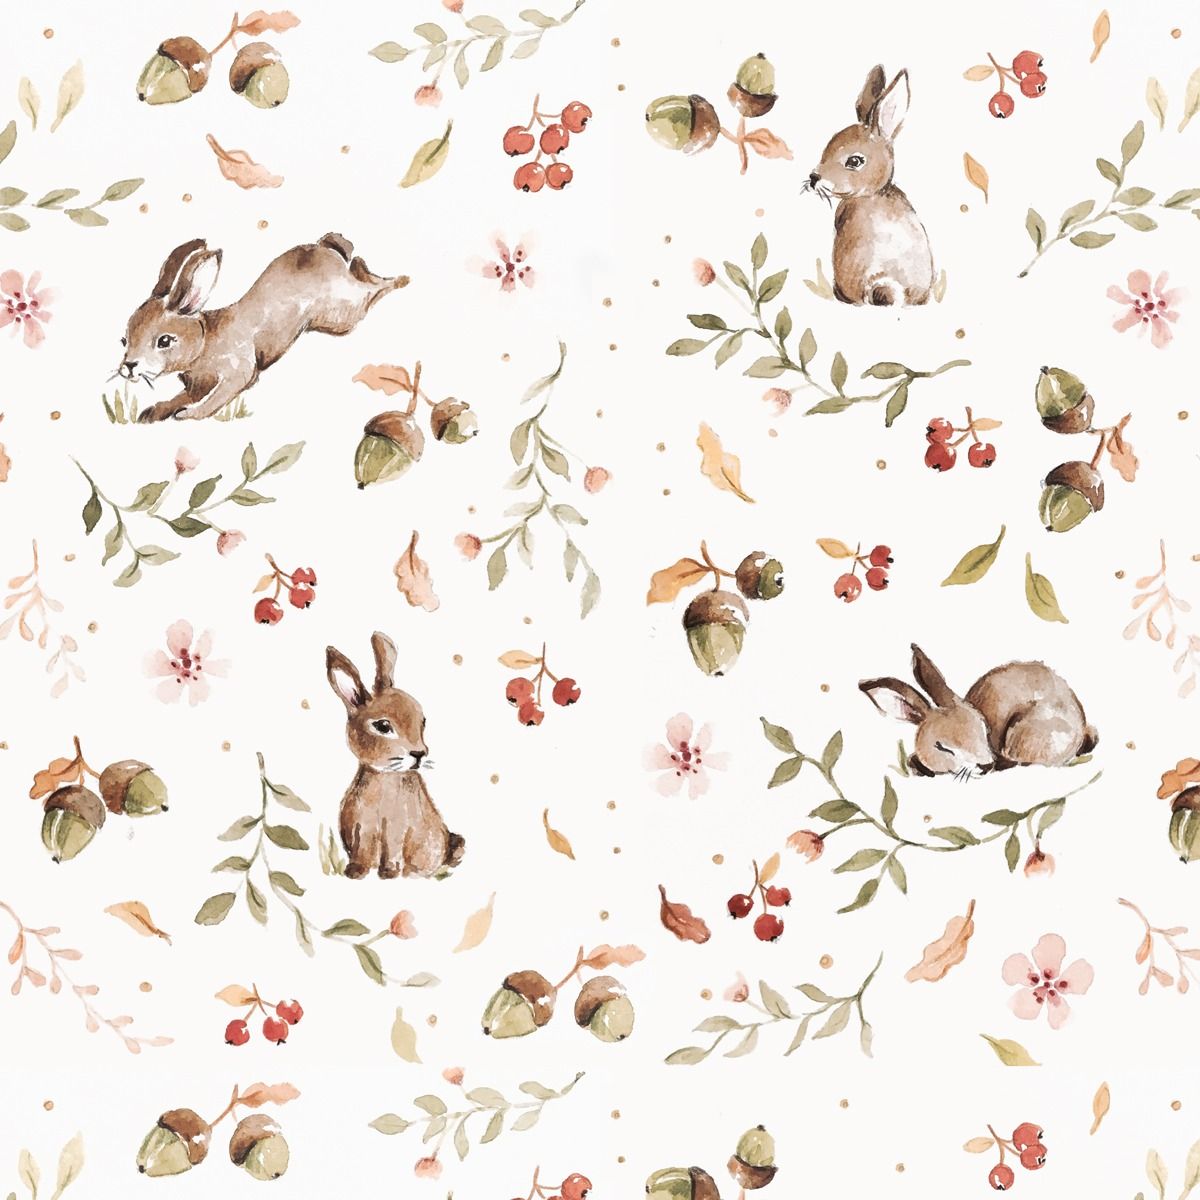 Happy Rabbits Wallpaper.com Wallstickers And Wallpaper Online Store